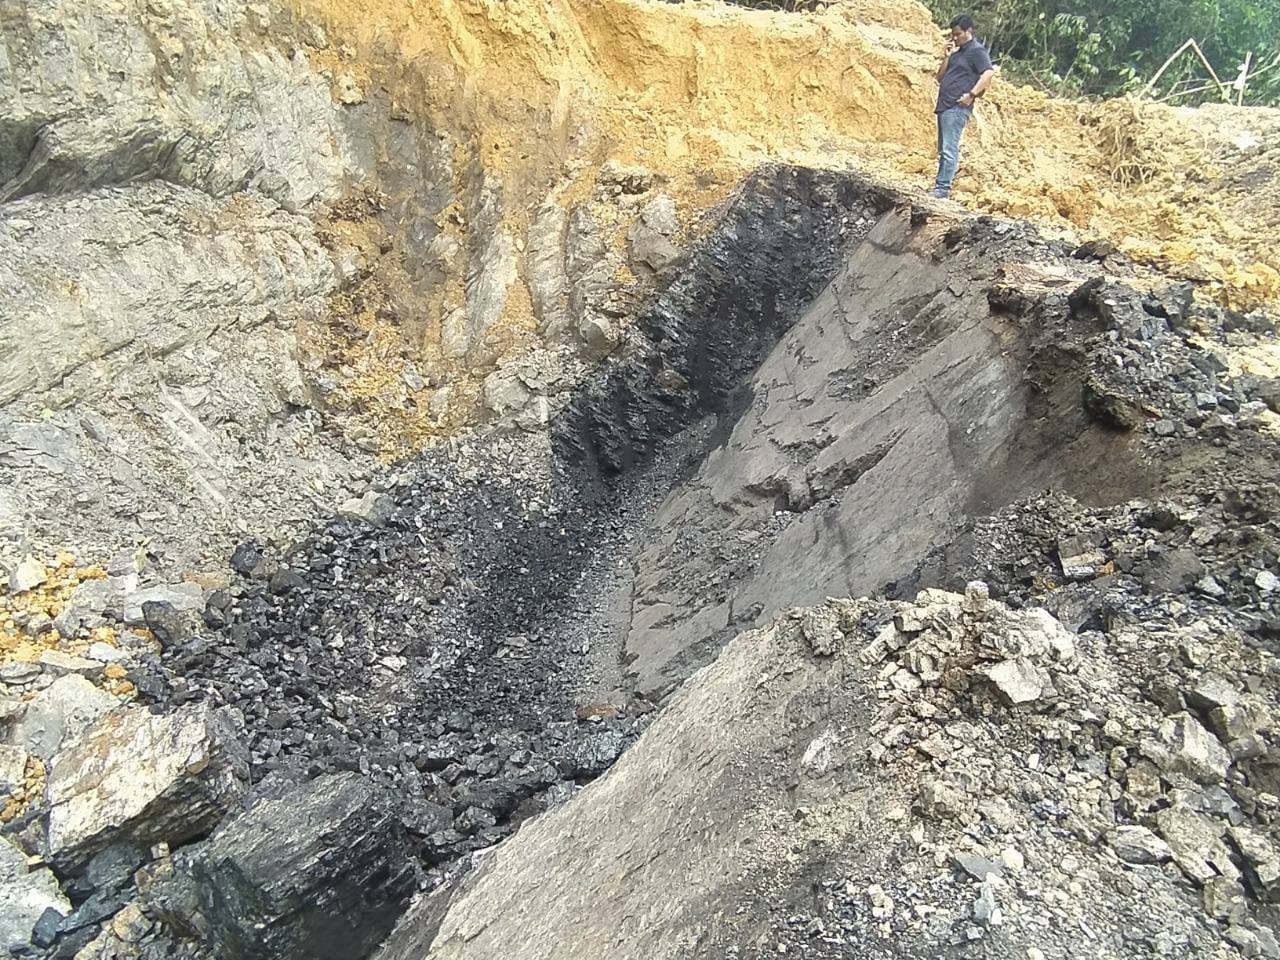 Lokasi pengupasan lahan di diduga tambang ilegal di Desa Sumber Sari di kawasan wisata air terjun. (Supri/Kaltimtoday.co)